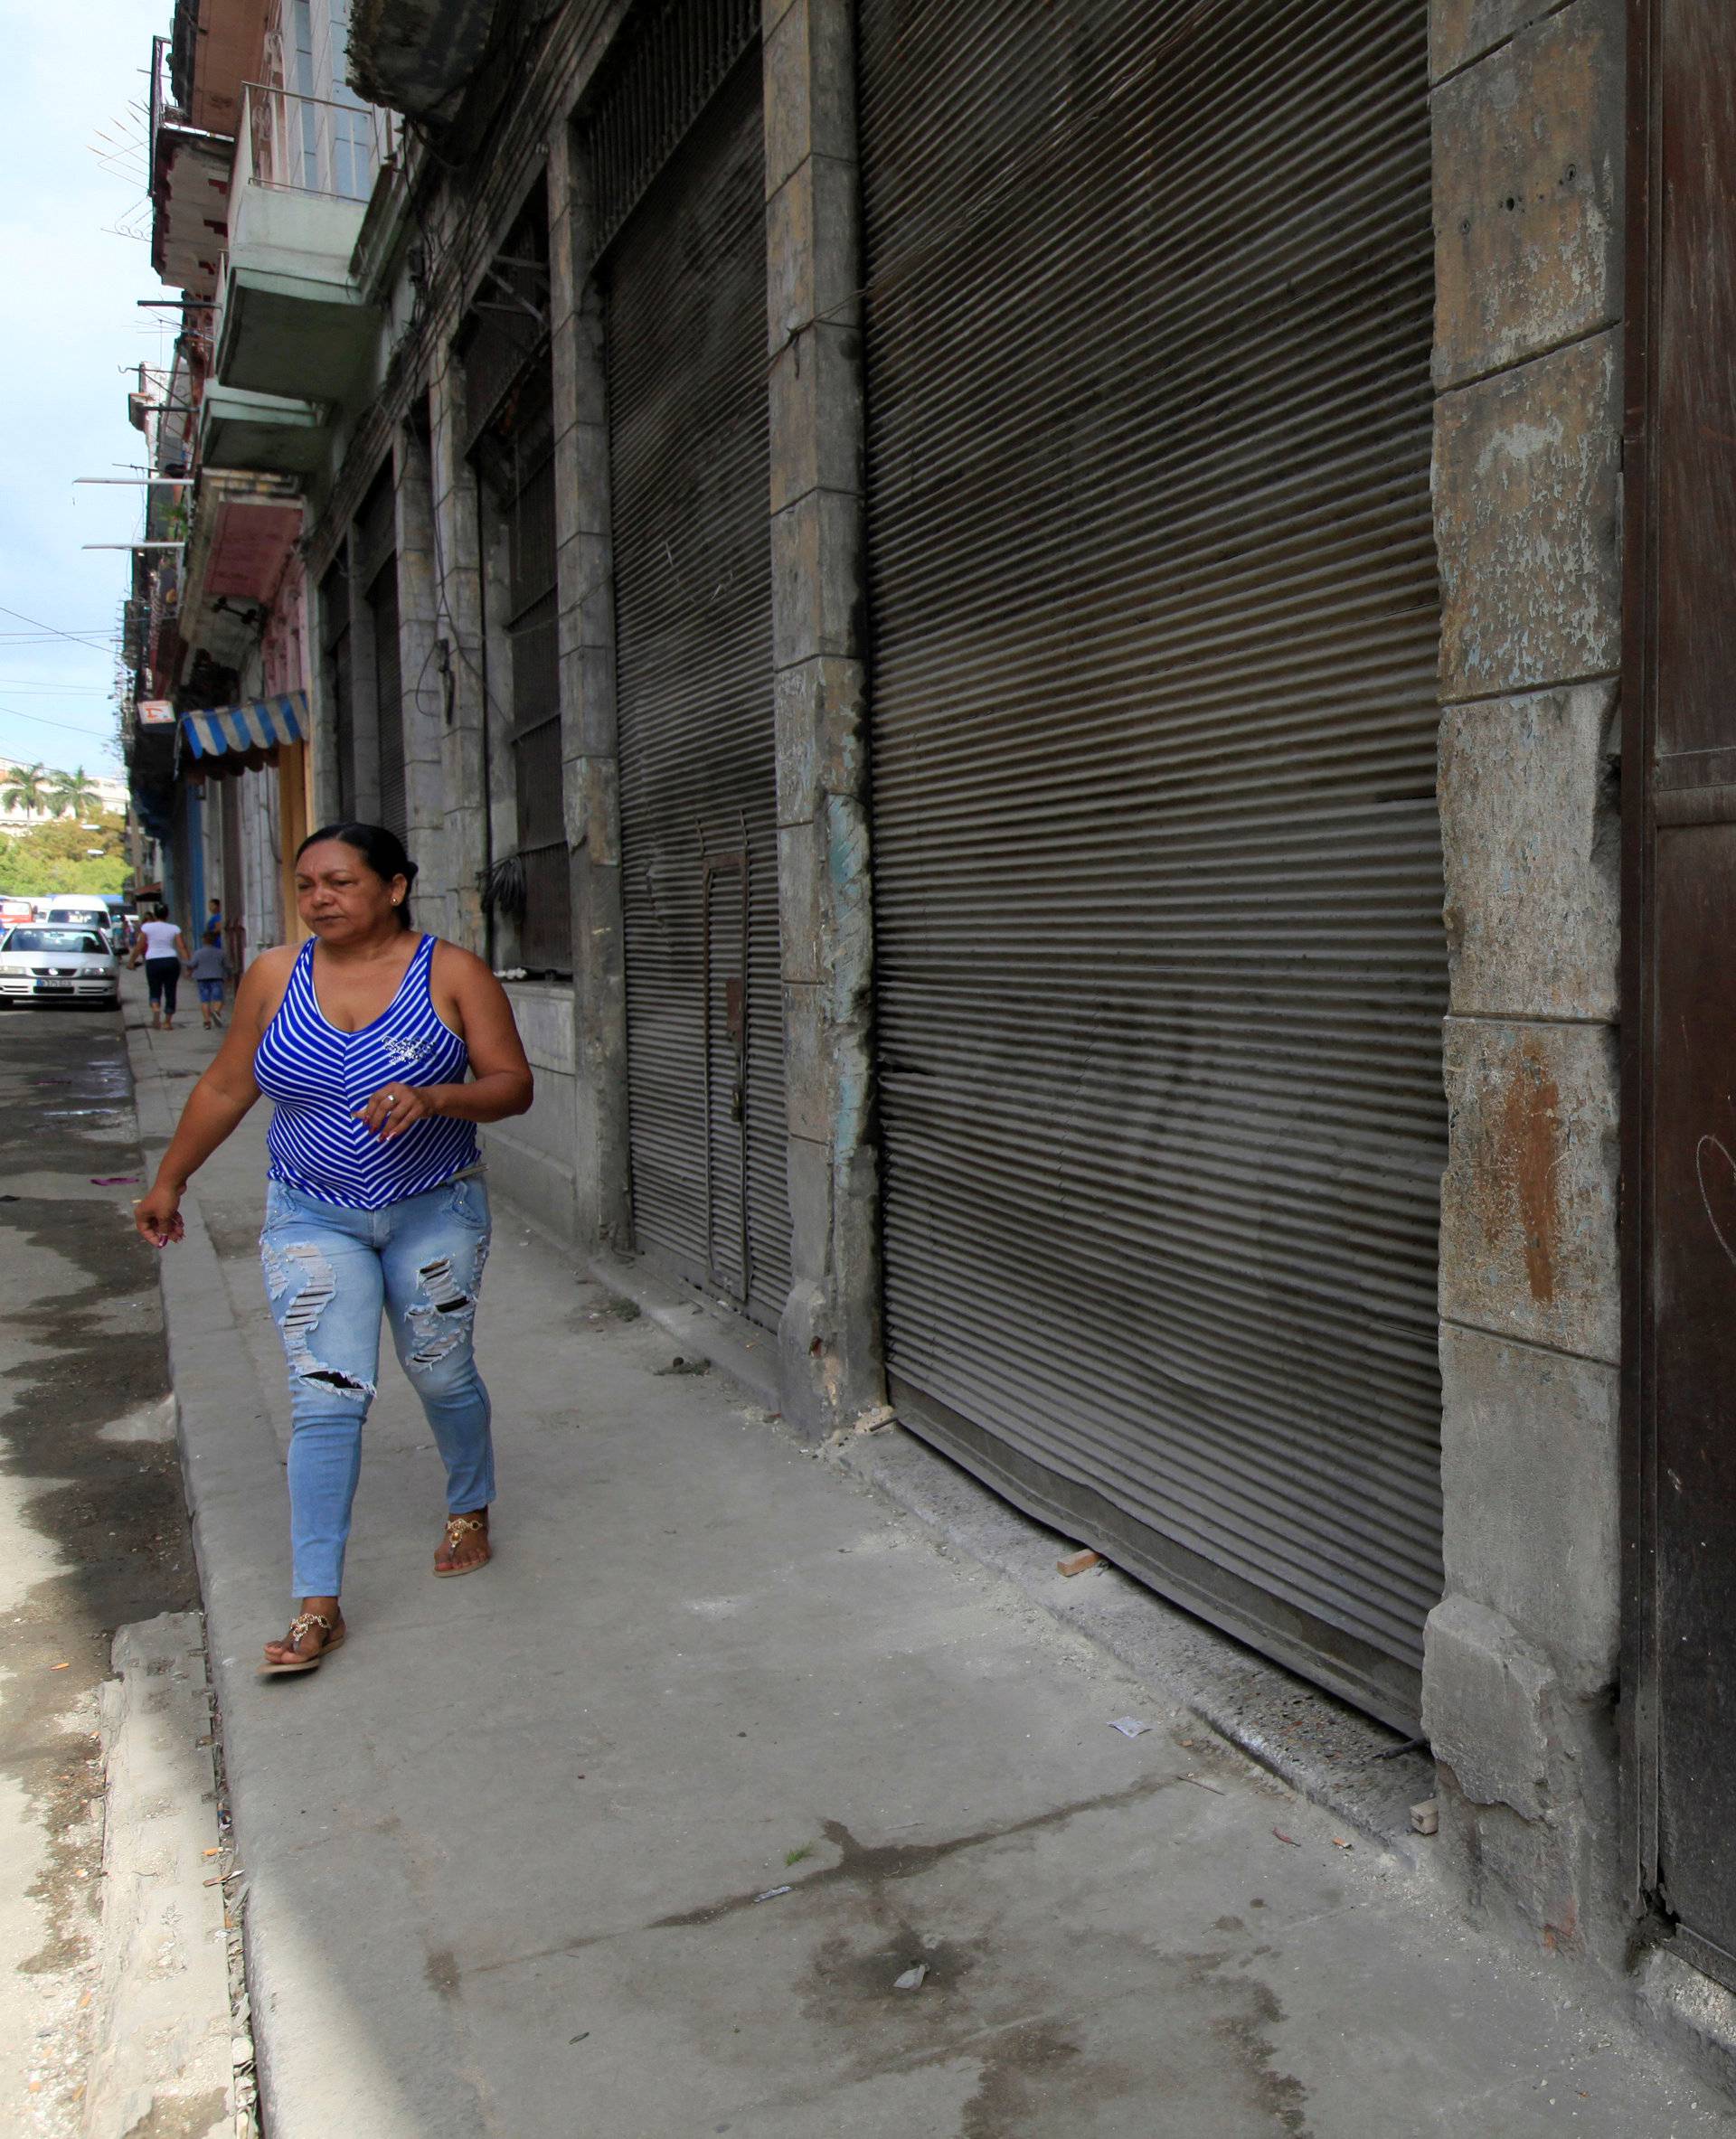 A woman walks past a graffiti that reads "Long live Fidel and Raul" in Havana, Cuba